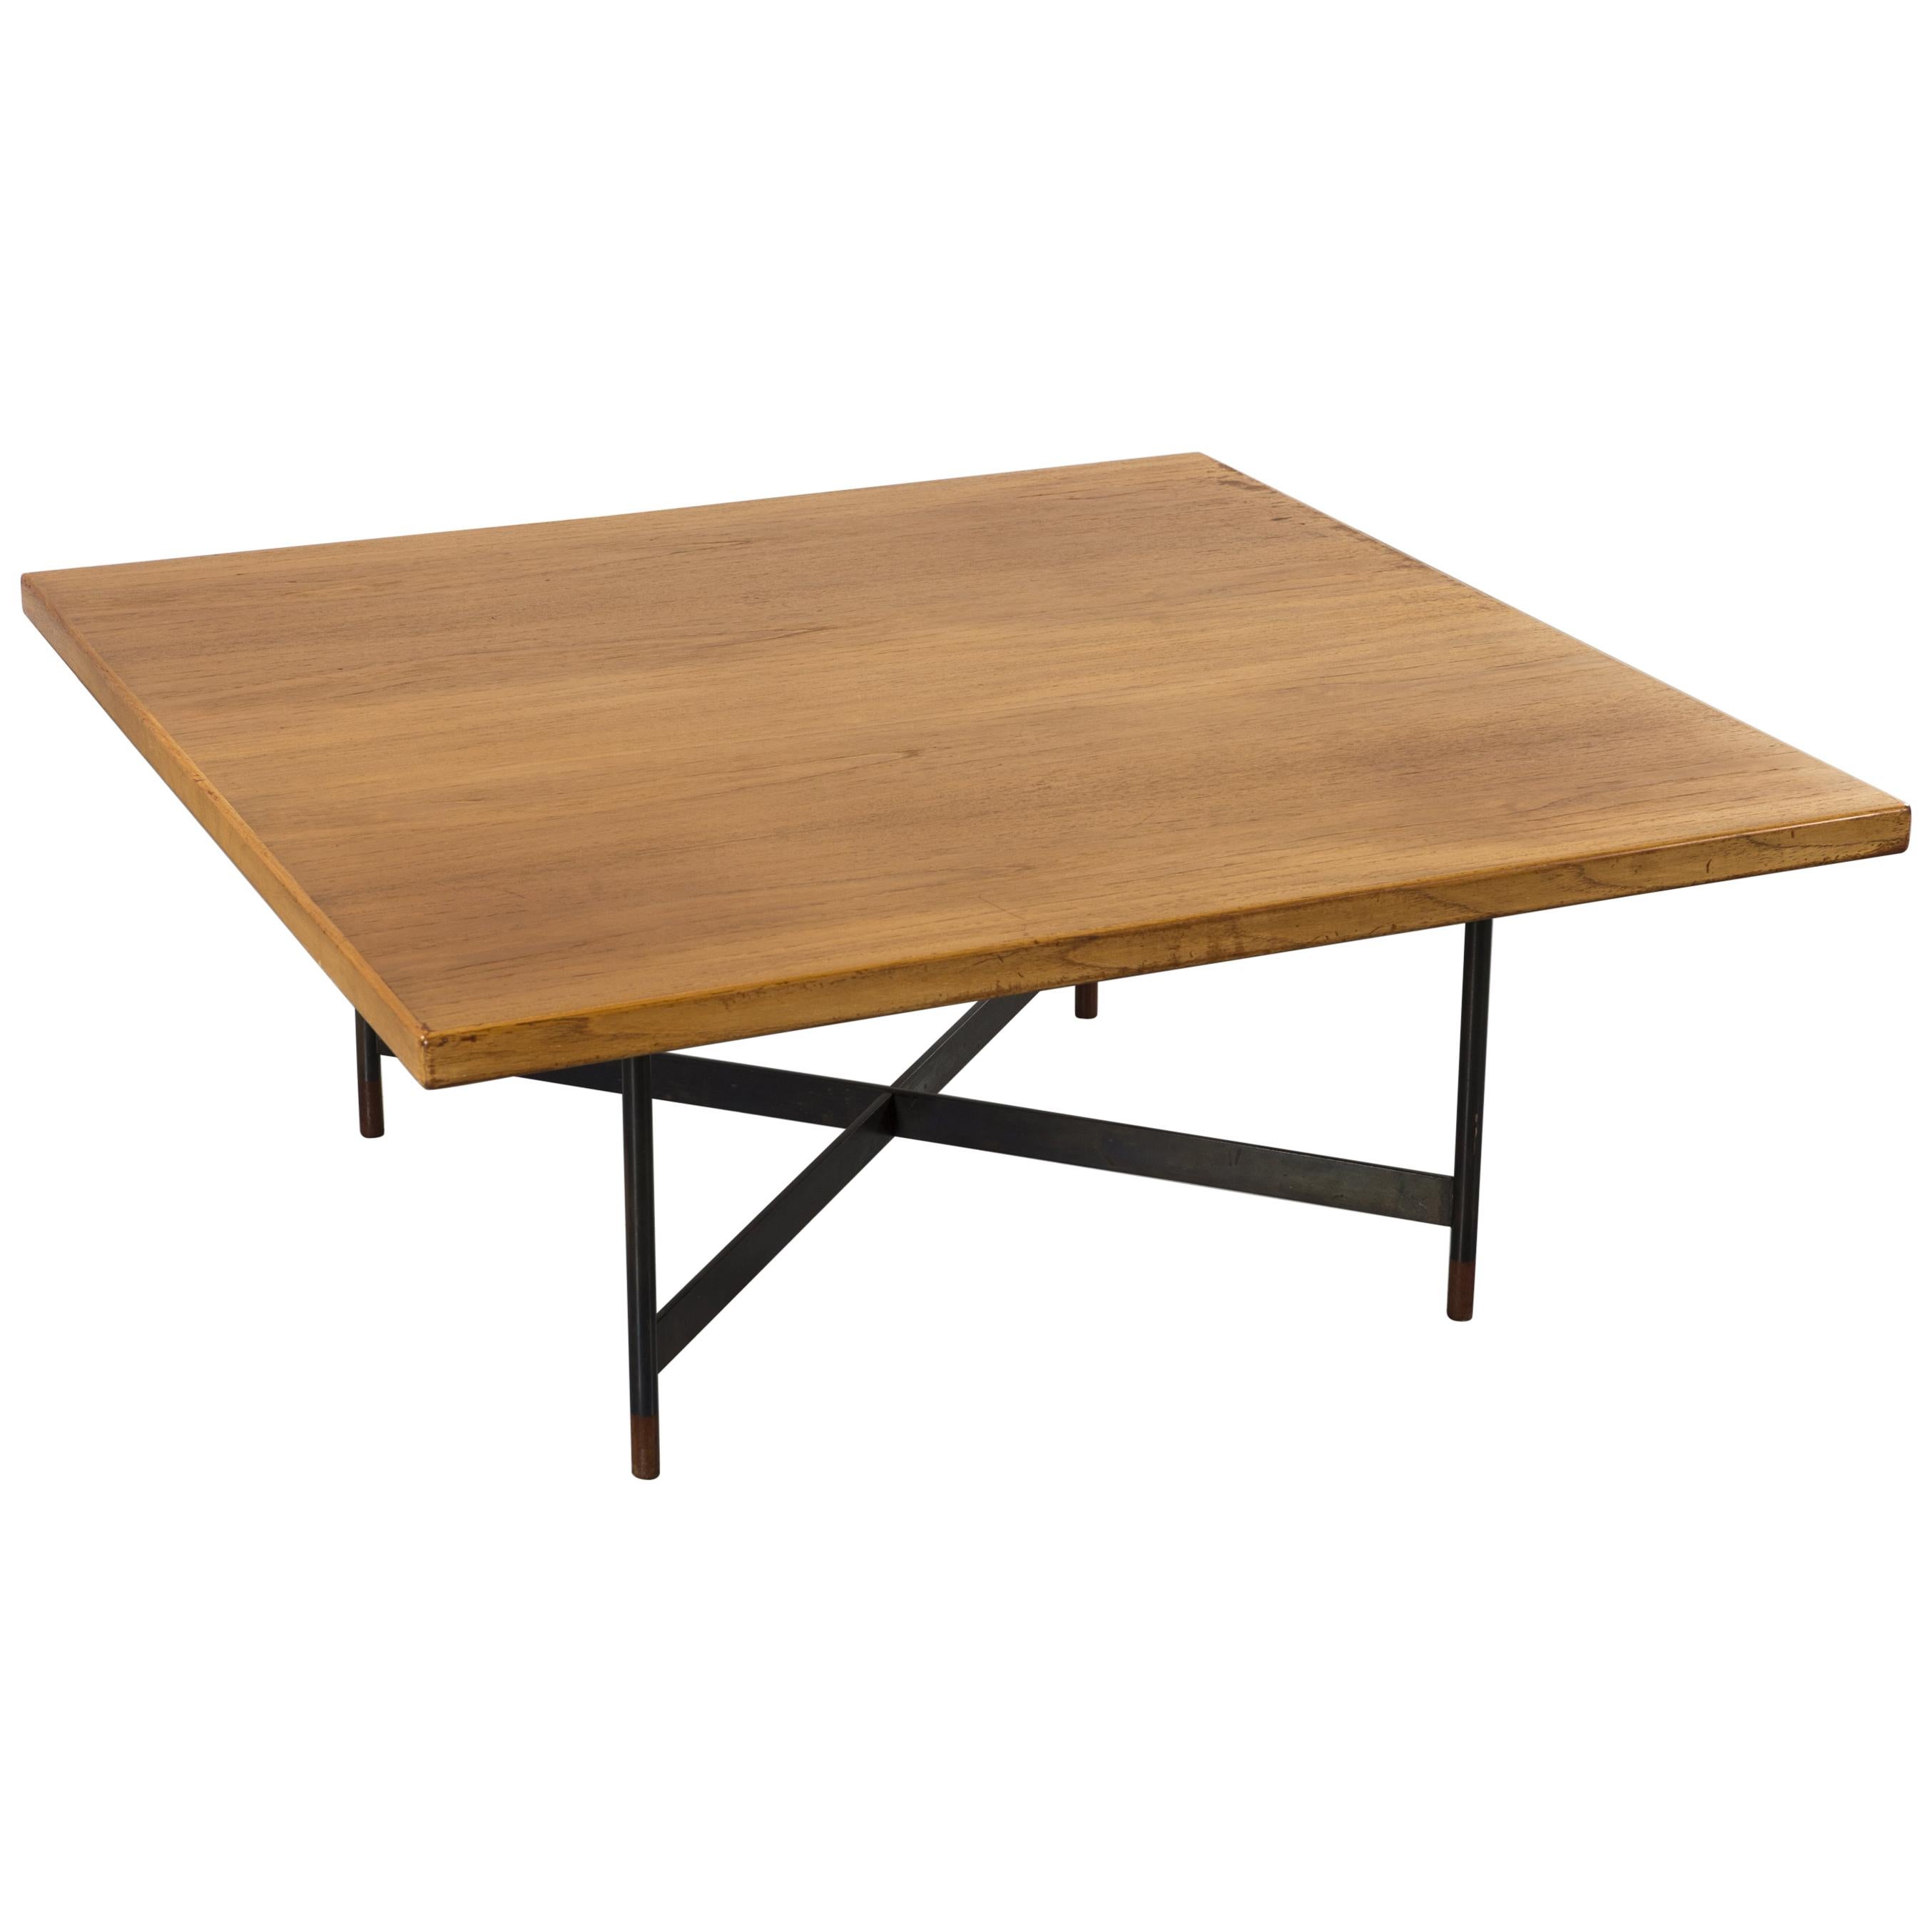 Square Coffee Table Model FJ57 by Finn Juhl, Vodder Edition